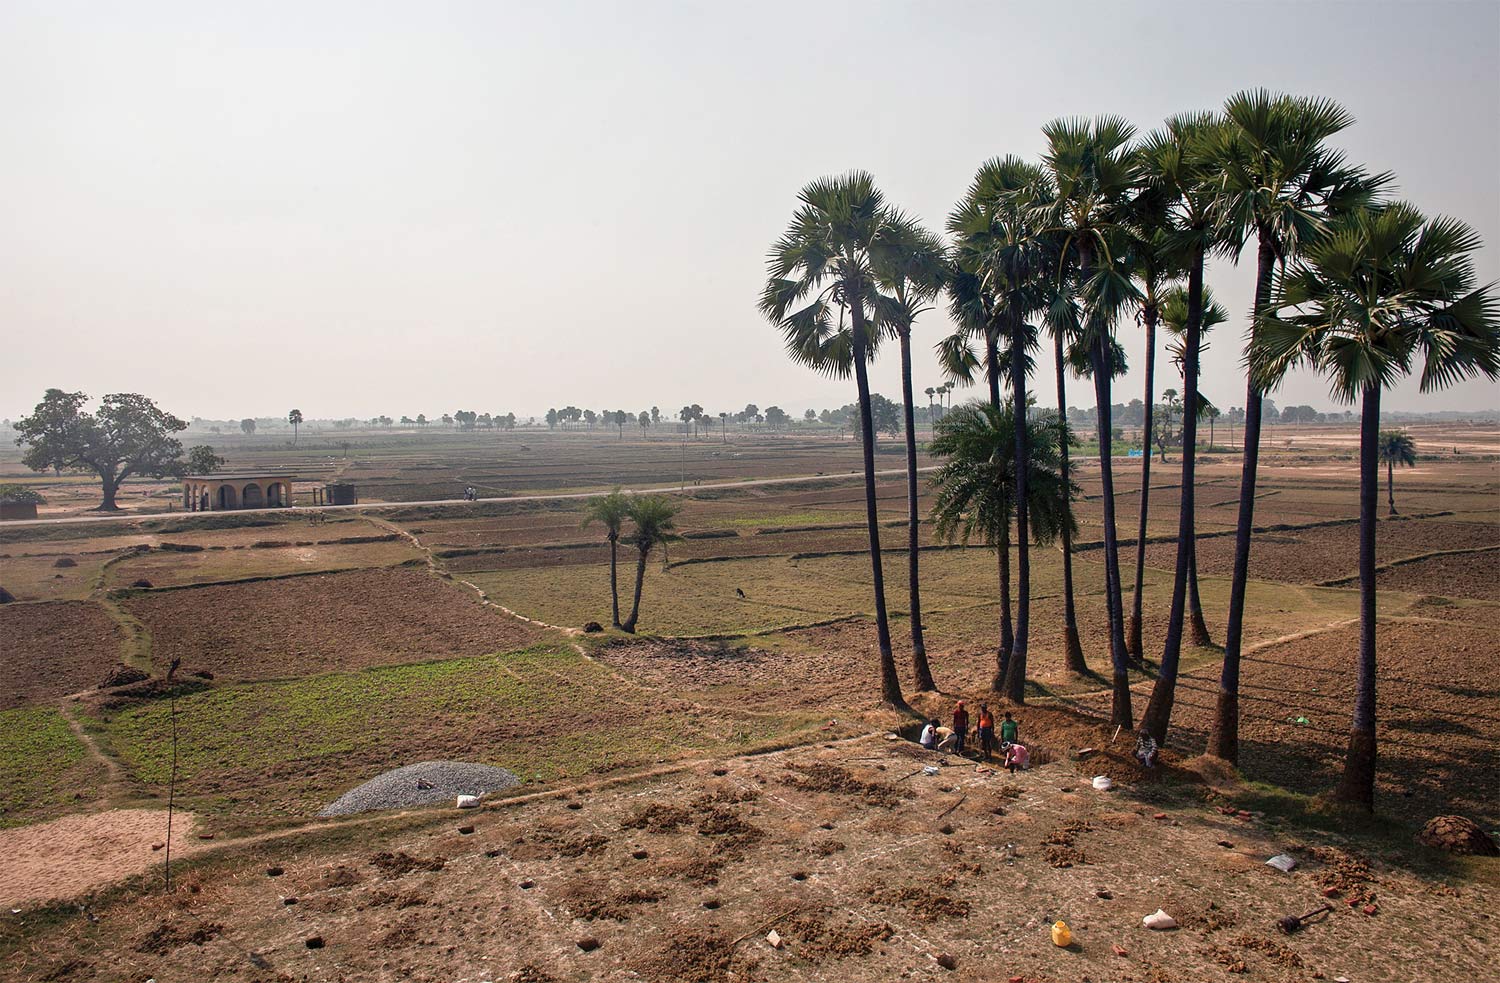 On the road in Bihar, 2013.